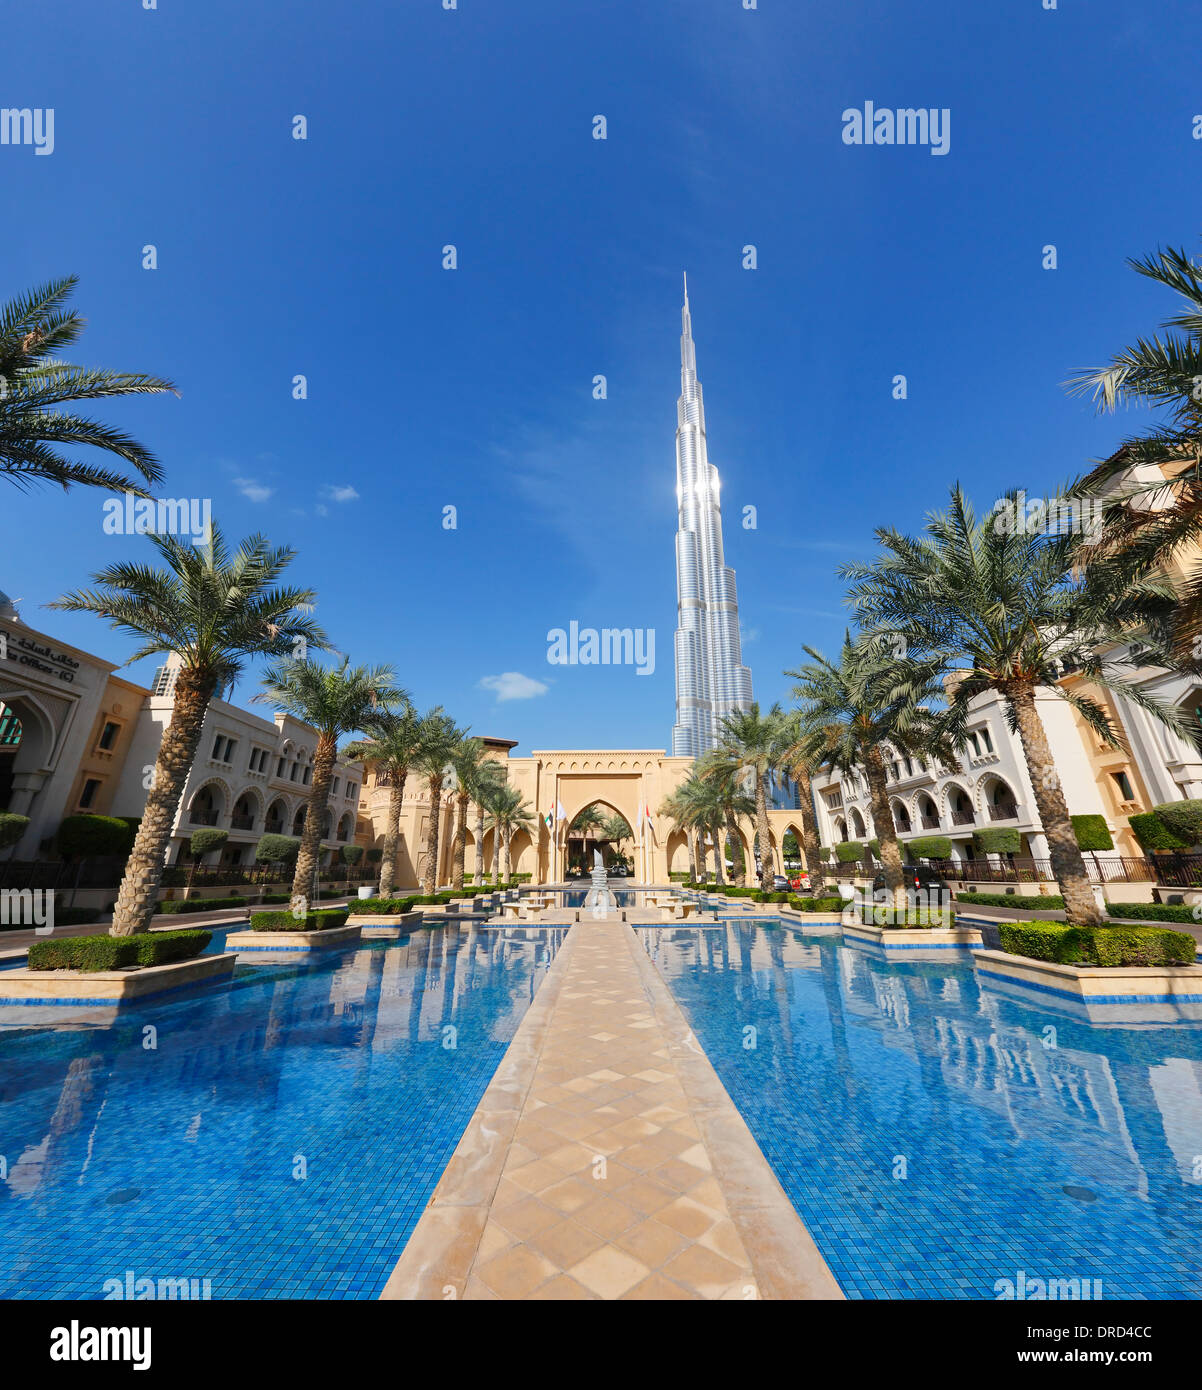 The Hotel Palace, Souk Al Bahar, Dubai Stock Photo